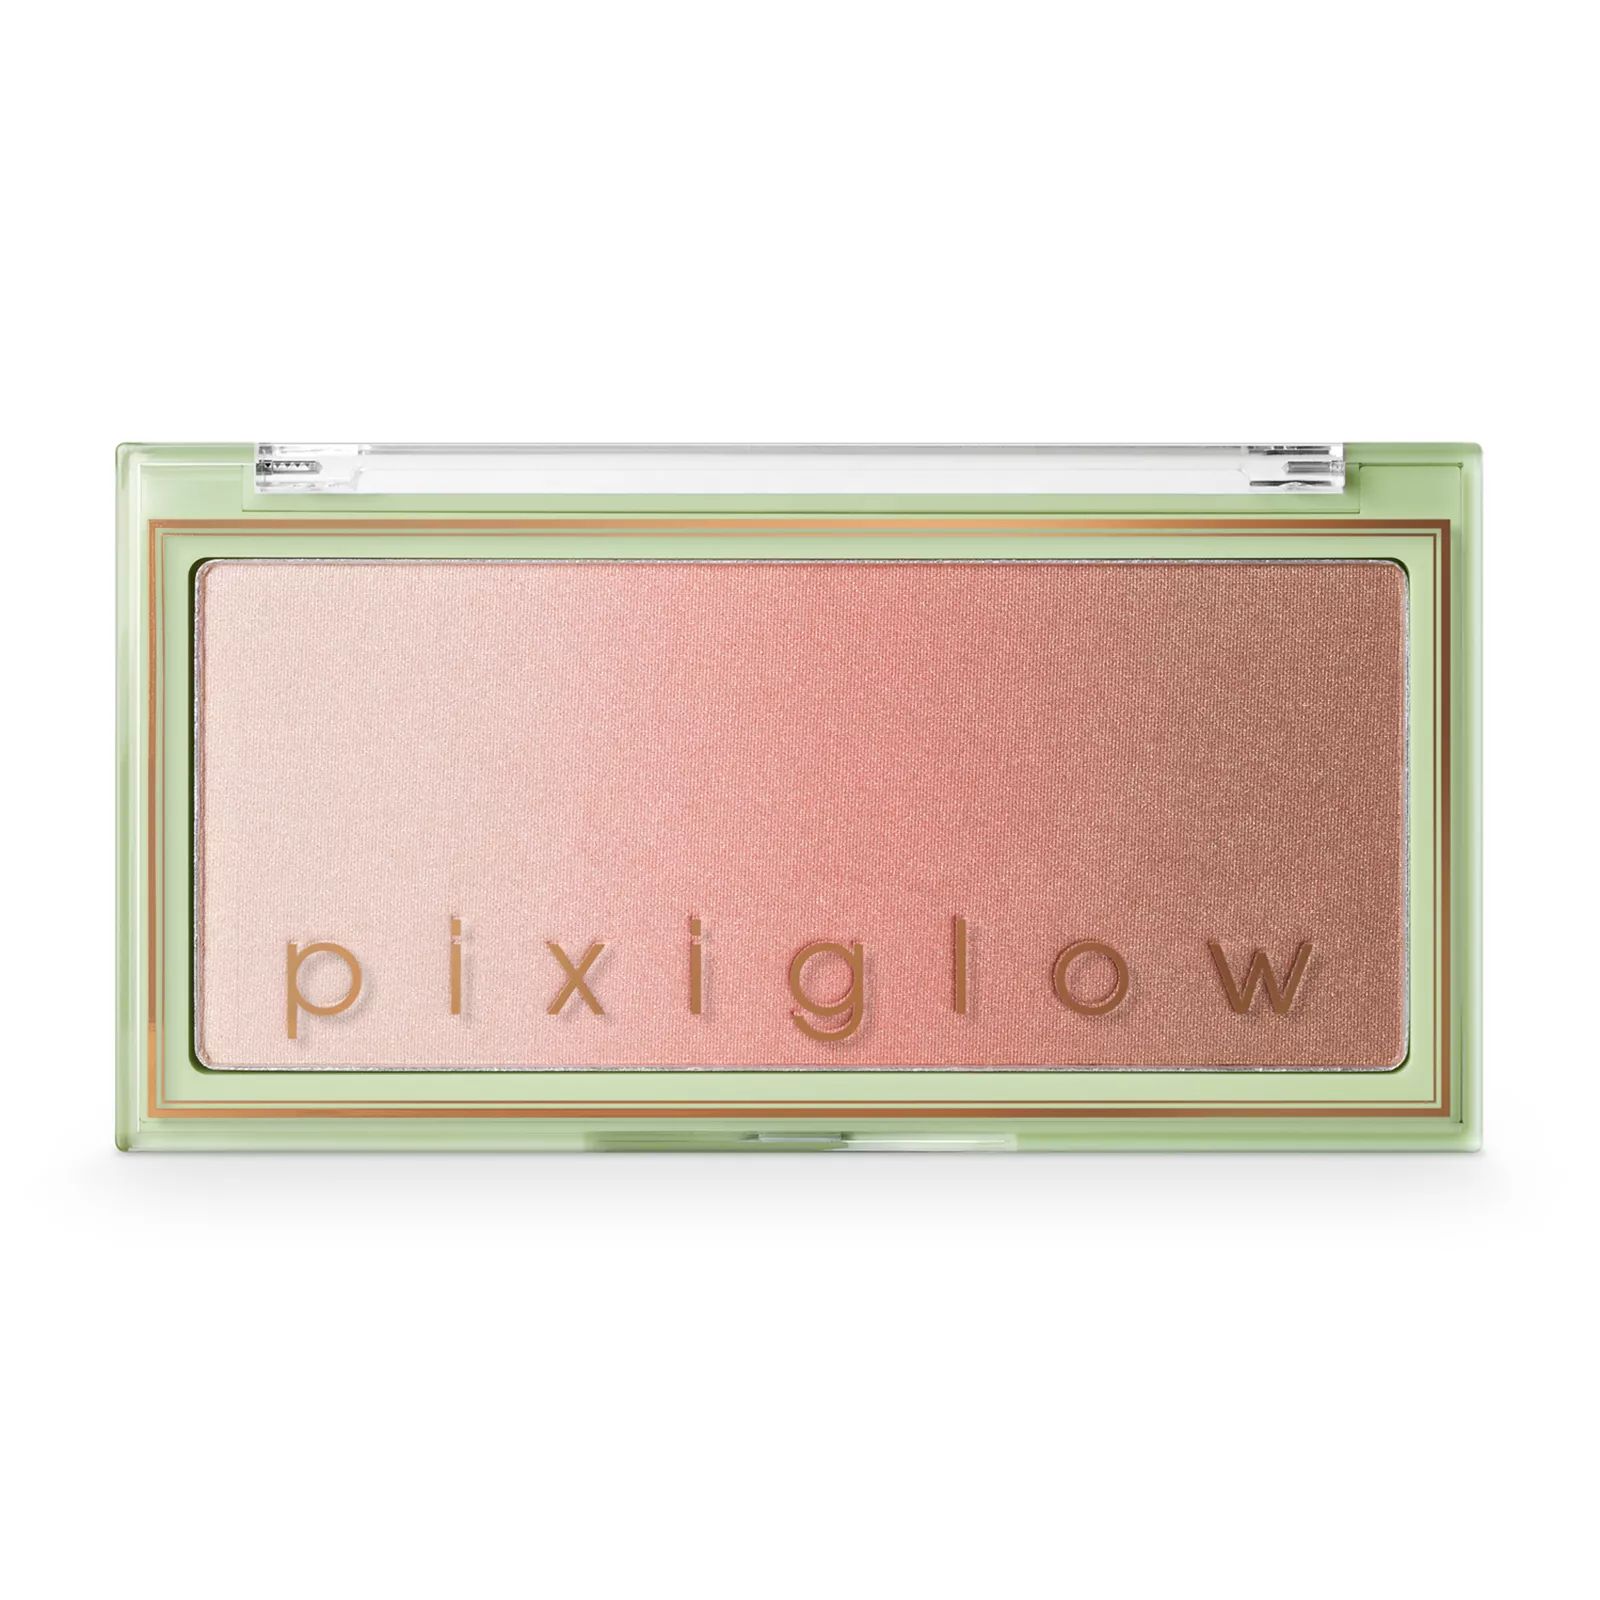 Pixi PixiGlow Cake | Kohl's